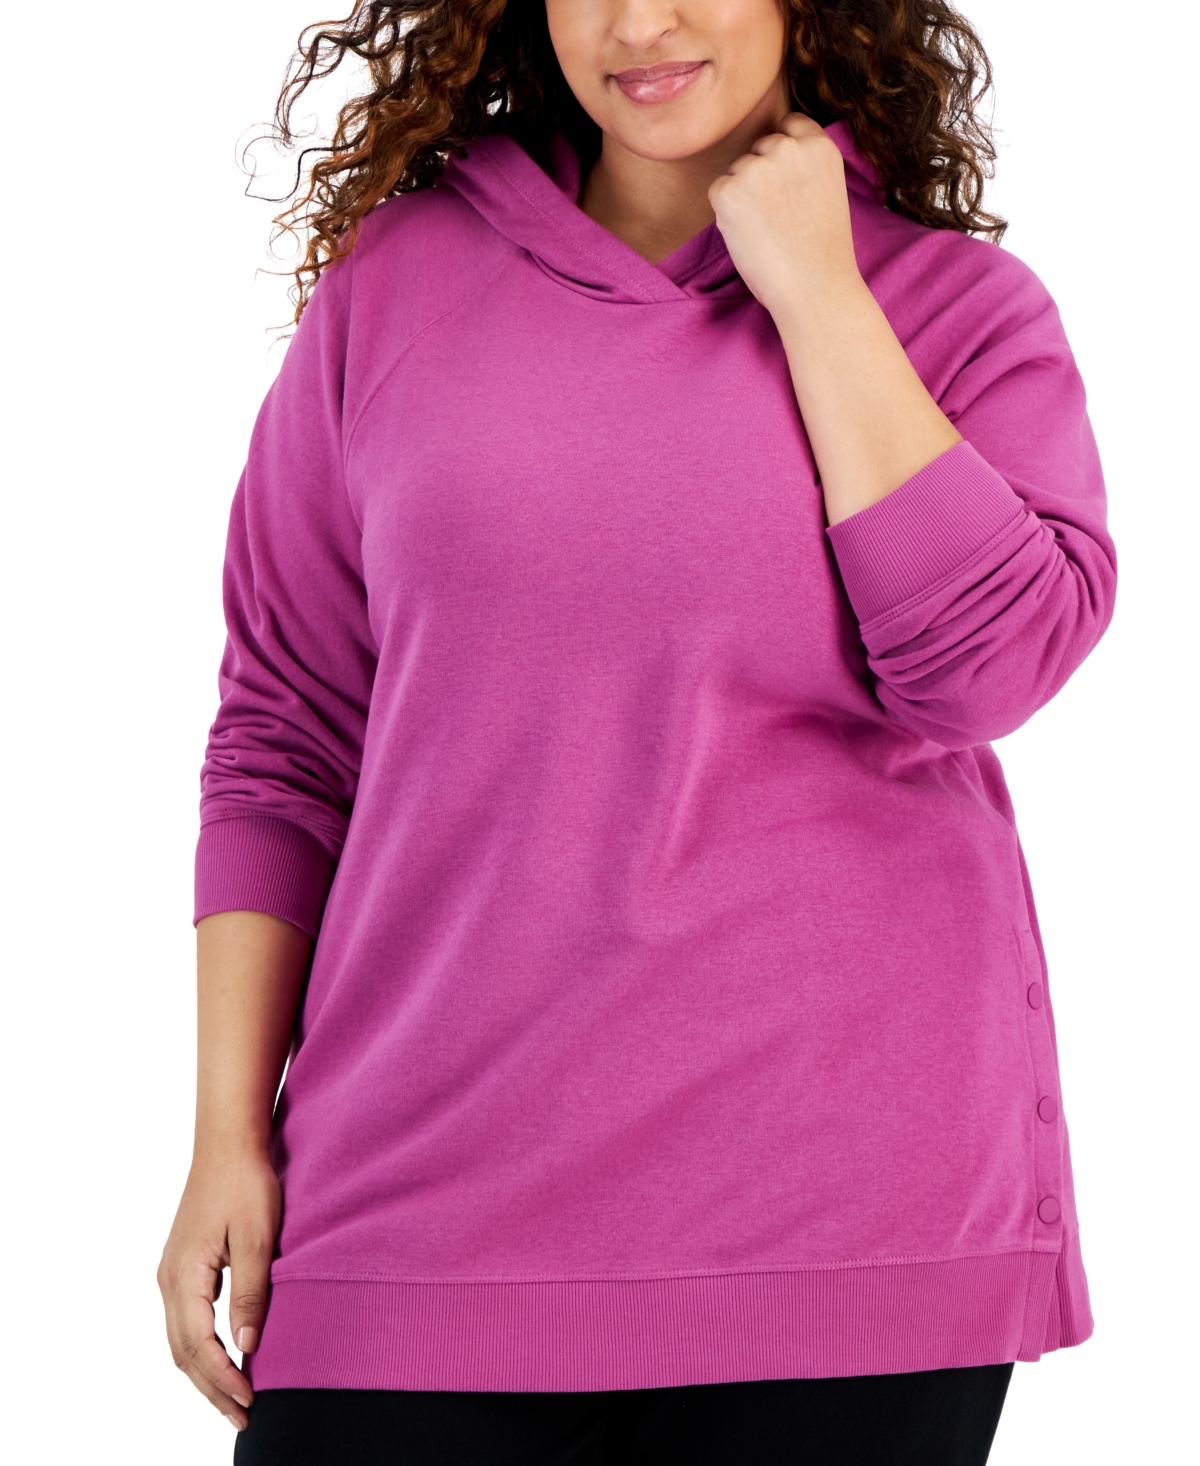 Women's Relaxed Hooded Fleece Sweatshirt, Created for Macy's - Berry Frost